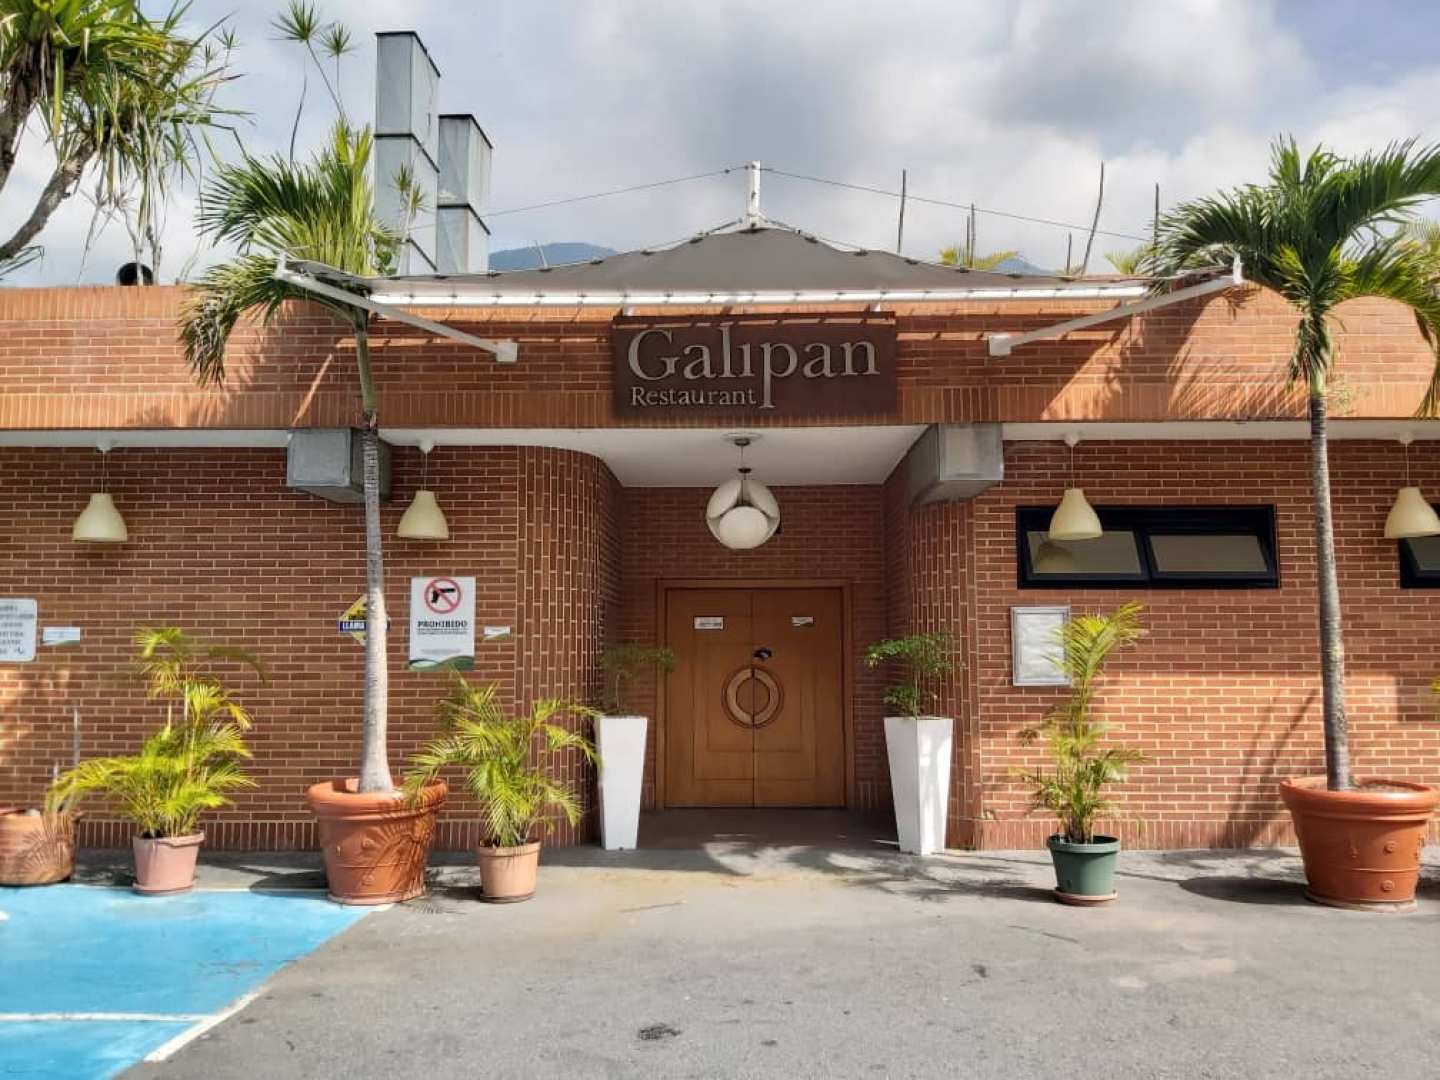 Galipan Restaurant